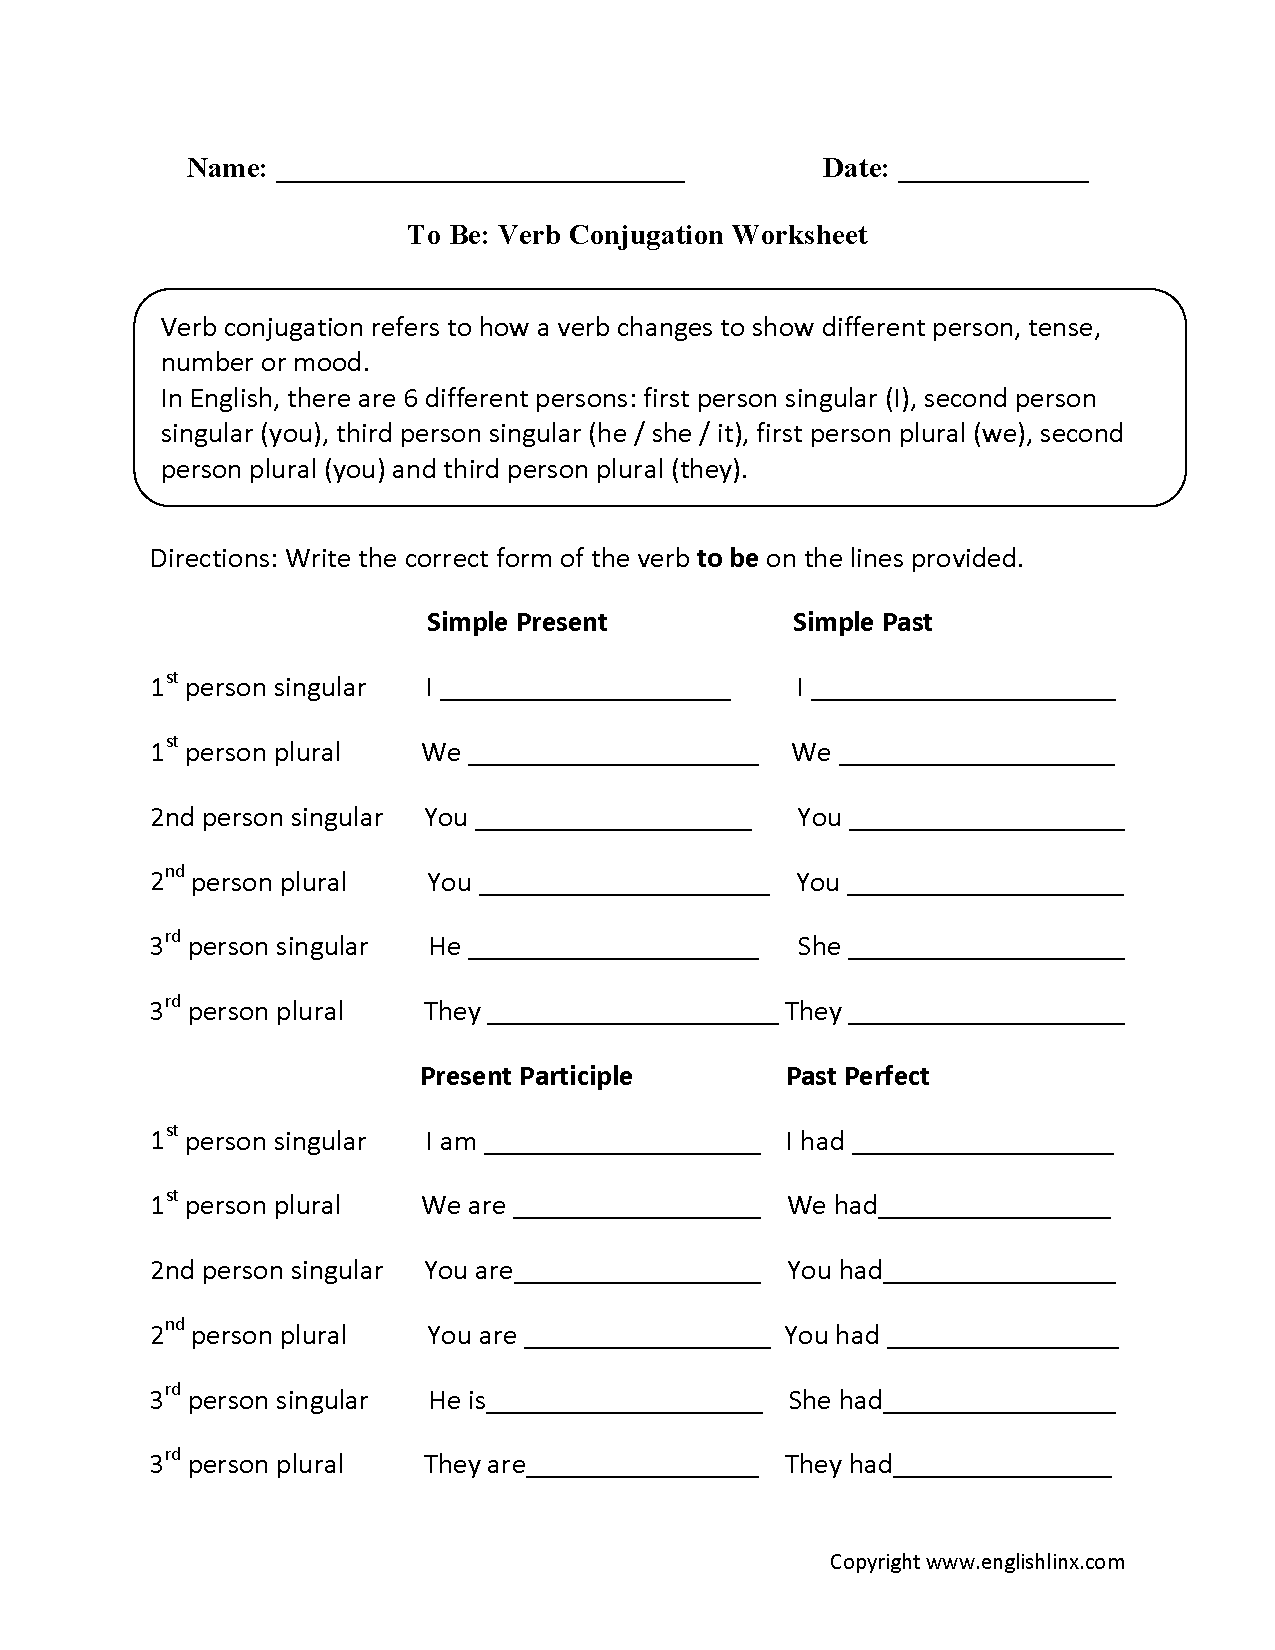 Verb Conjugation Worksheet